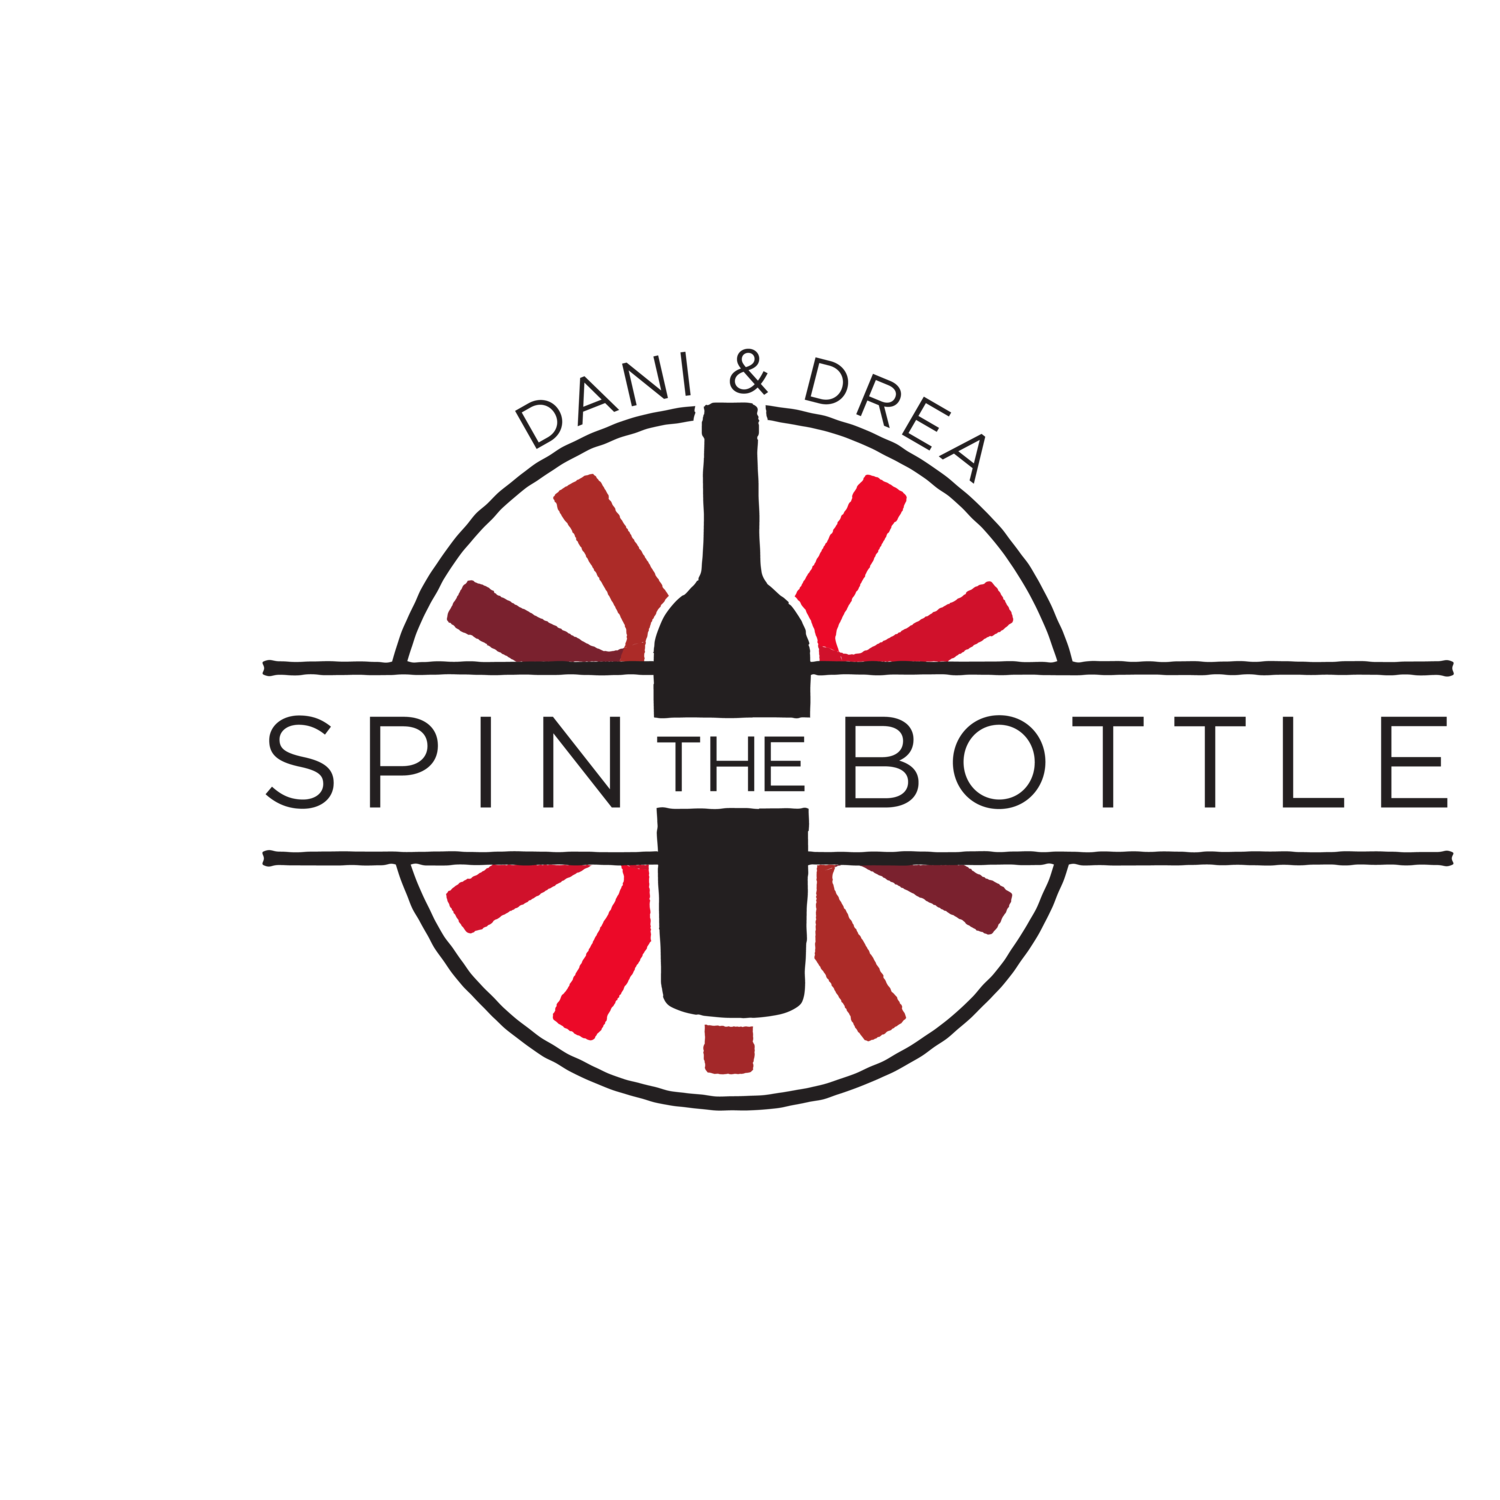 Spin the bottle lyrics